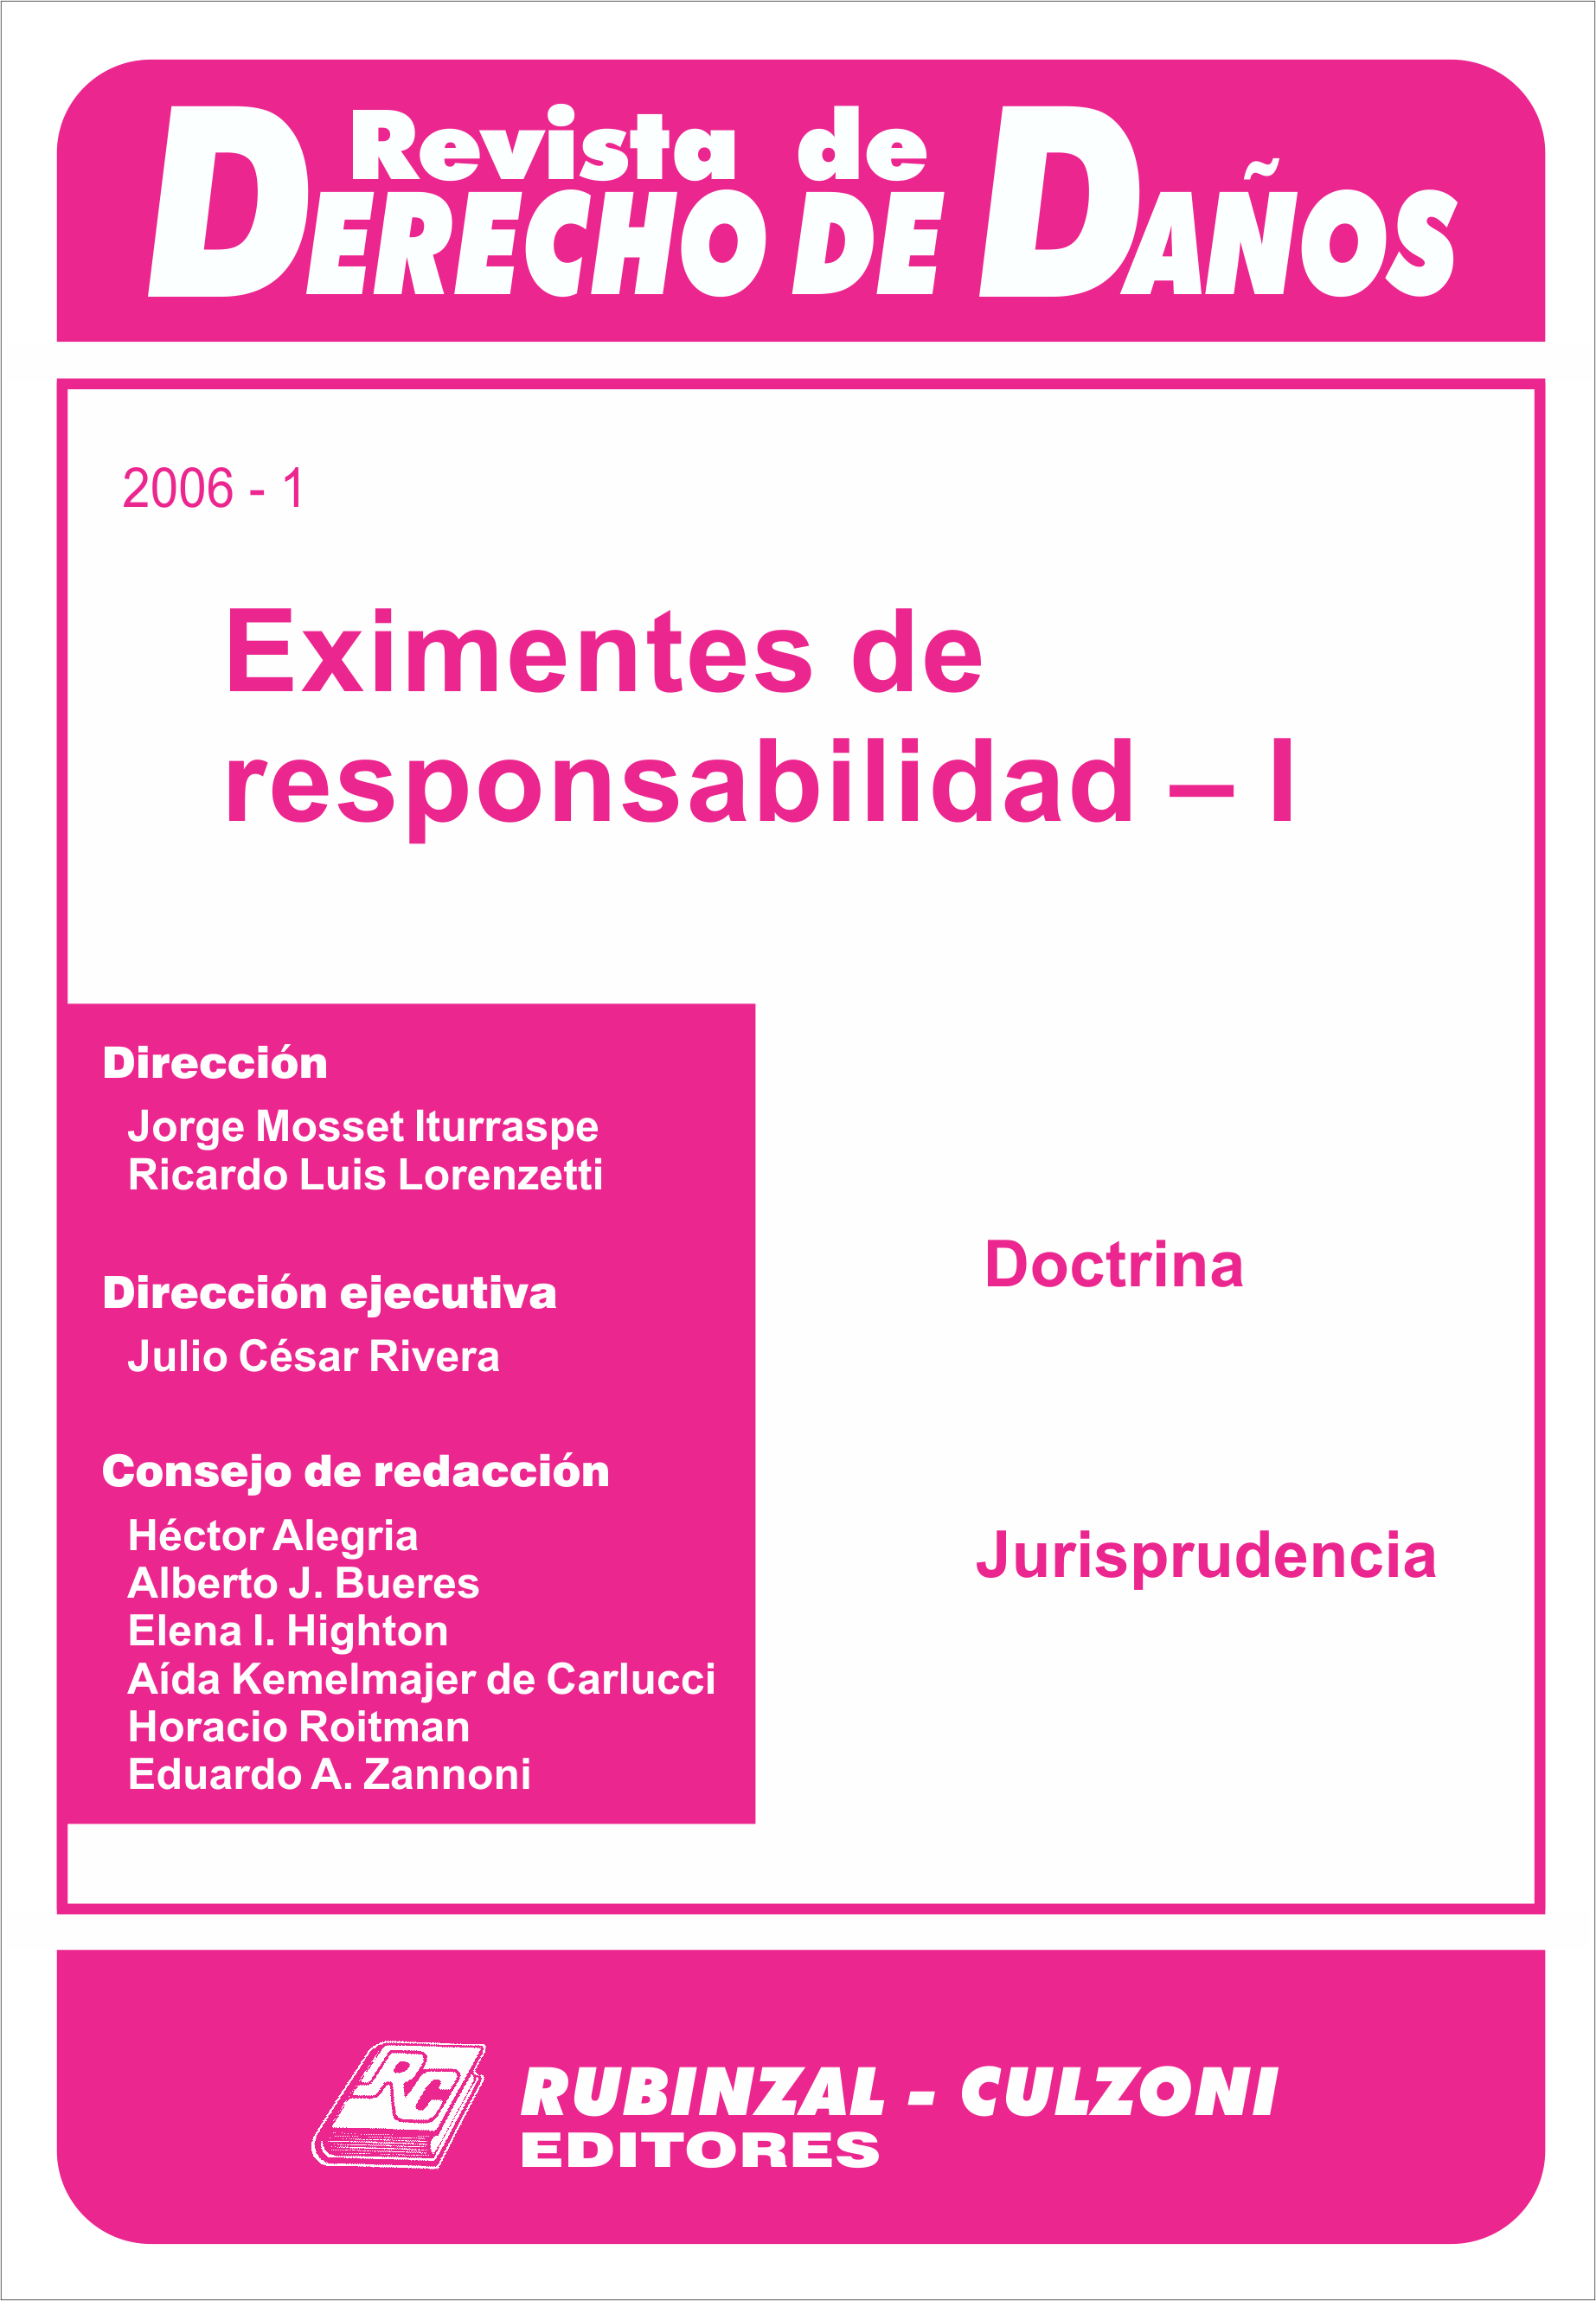 Revista de Derecho de Daños - Eximentes de responsabilidad - I.